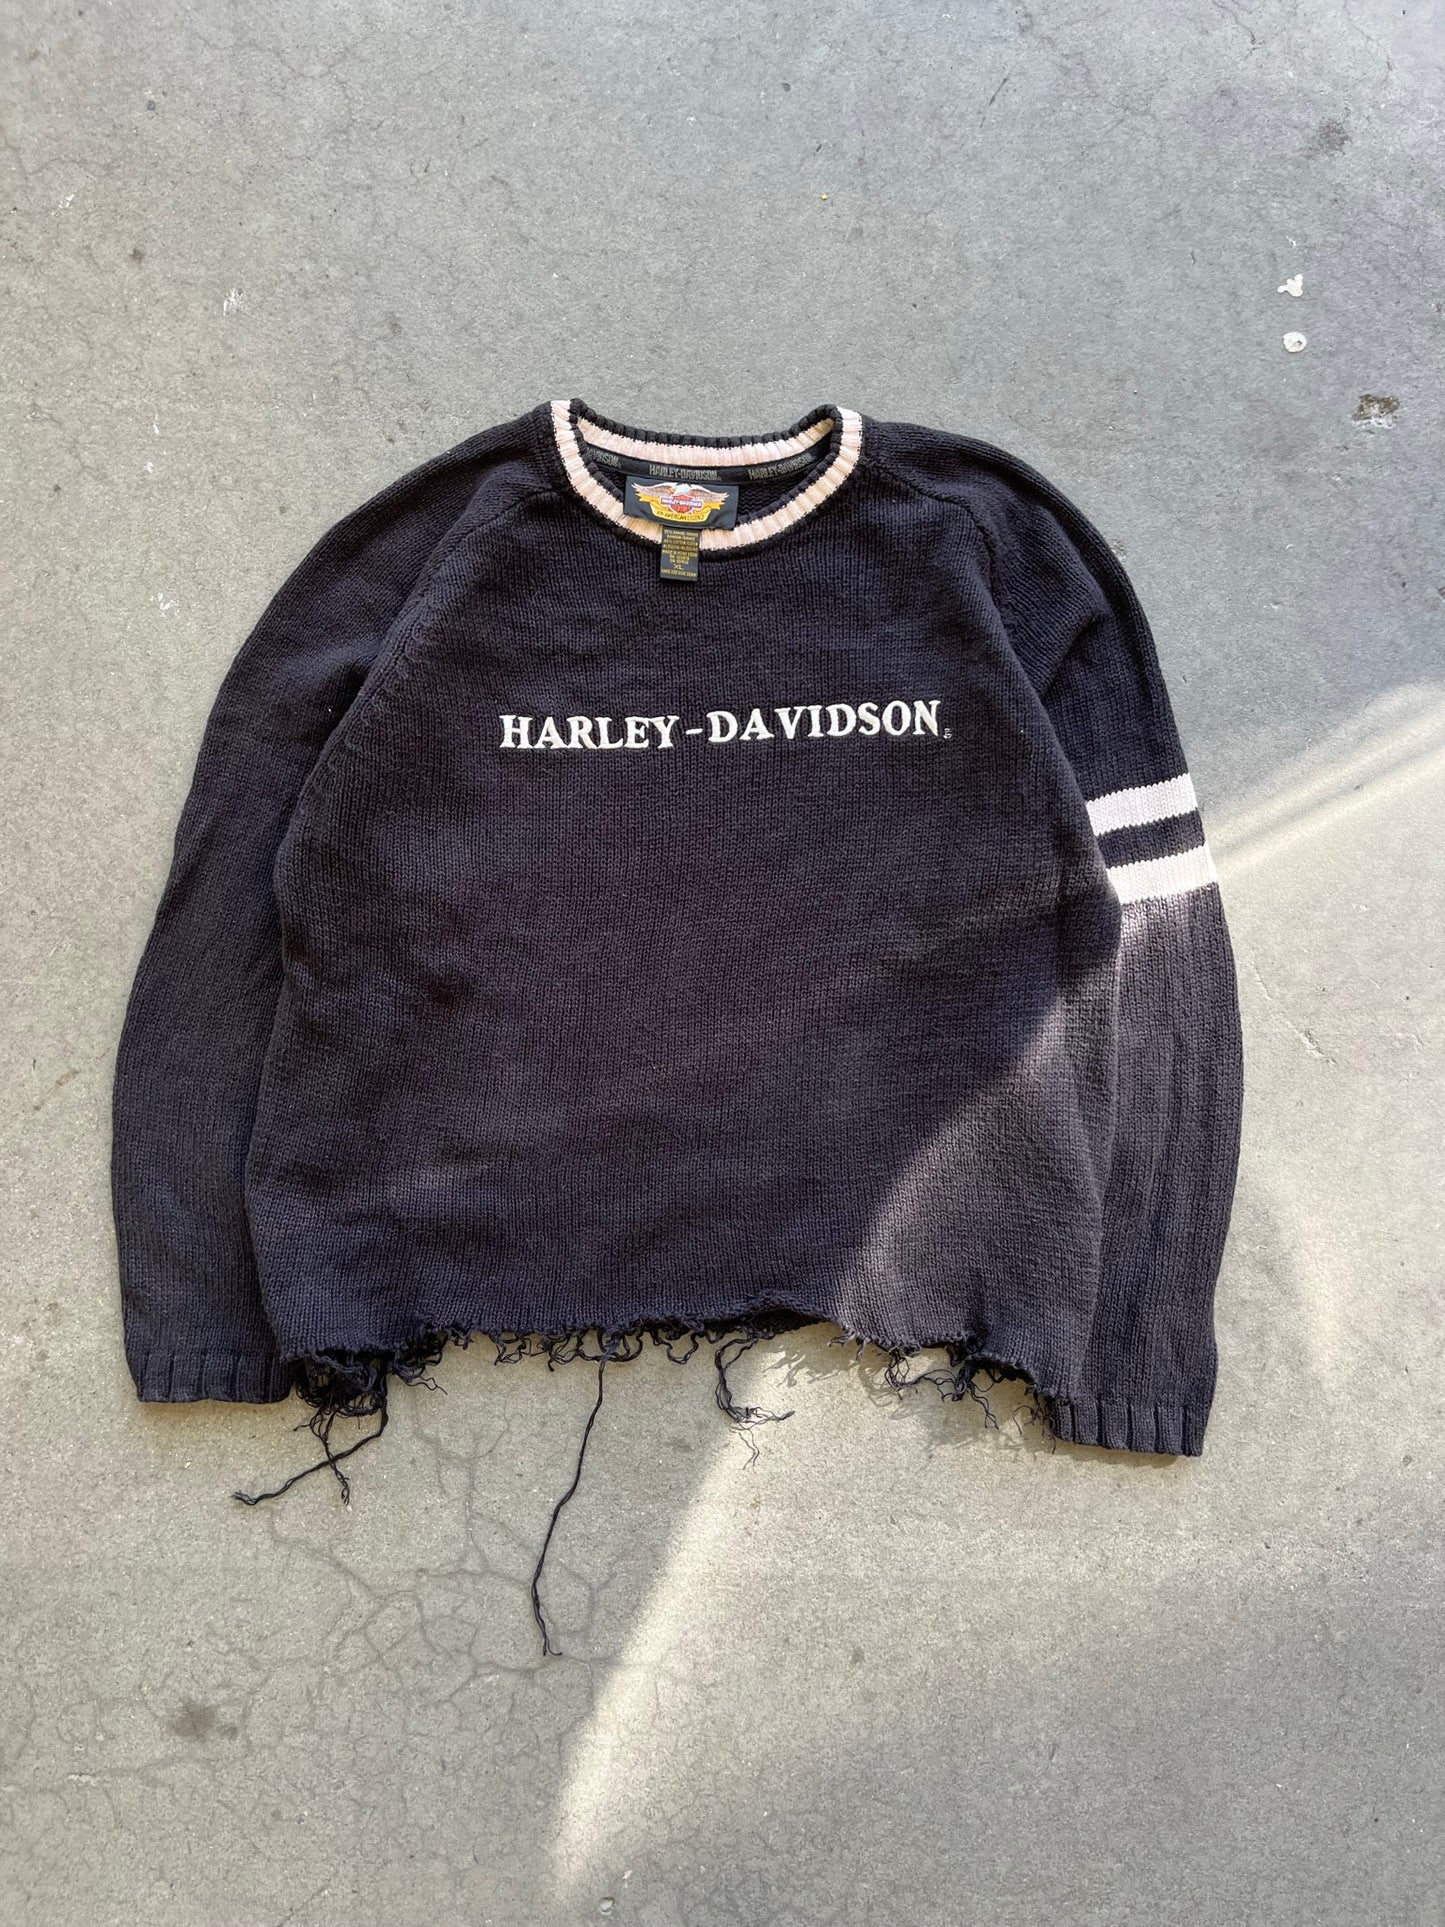 (L) 90s Harley Davidson Knitwear Cropped